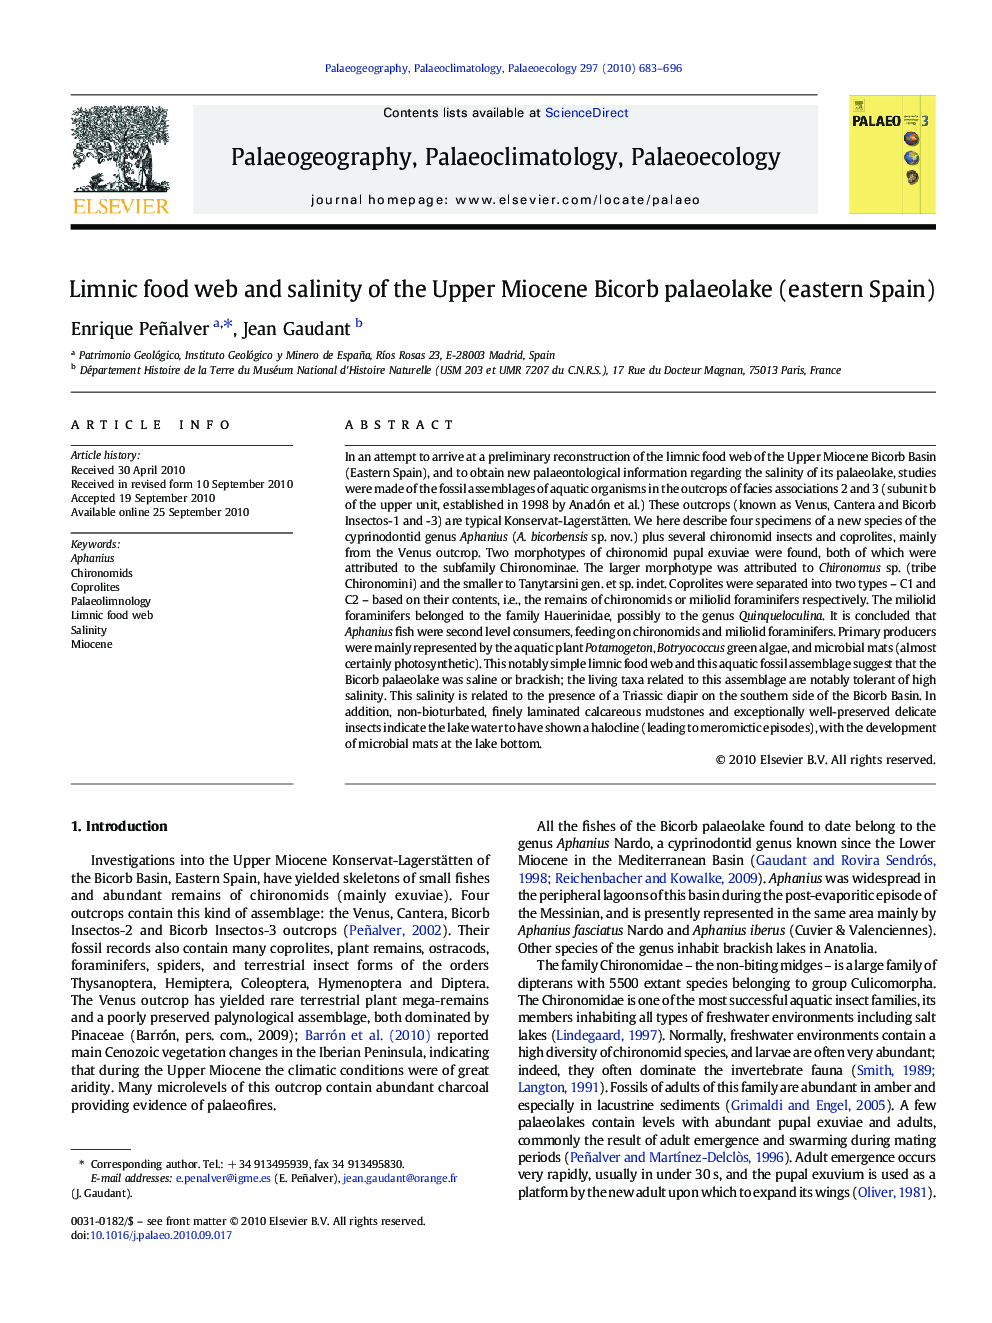 Limnic food web and salinity of the Upper Miocene Bicorb palaeolake (eastern Spain)